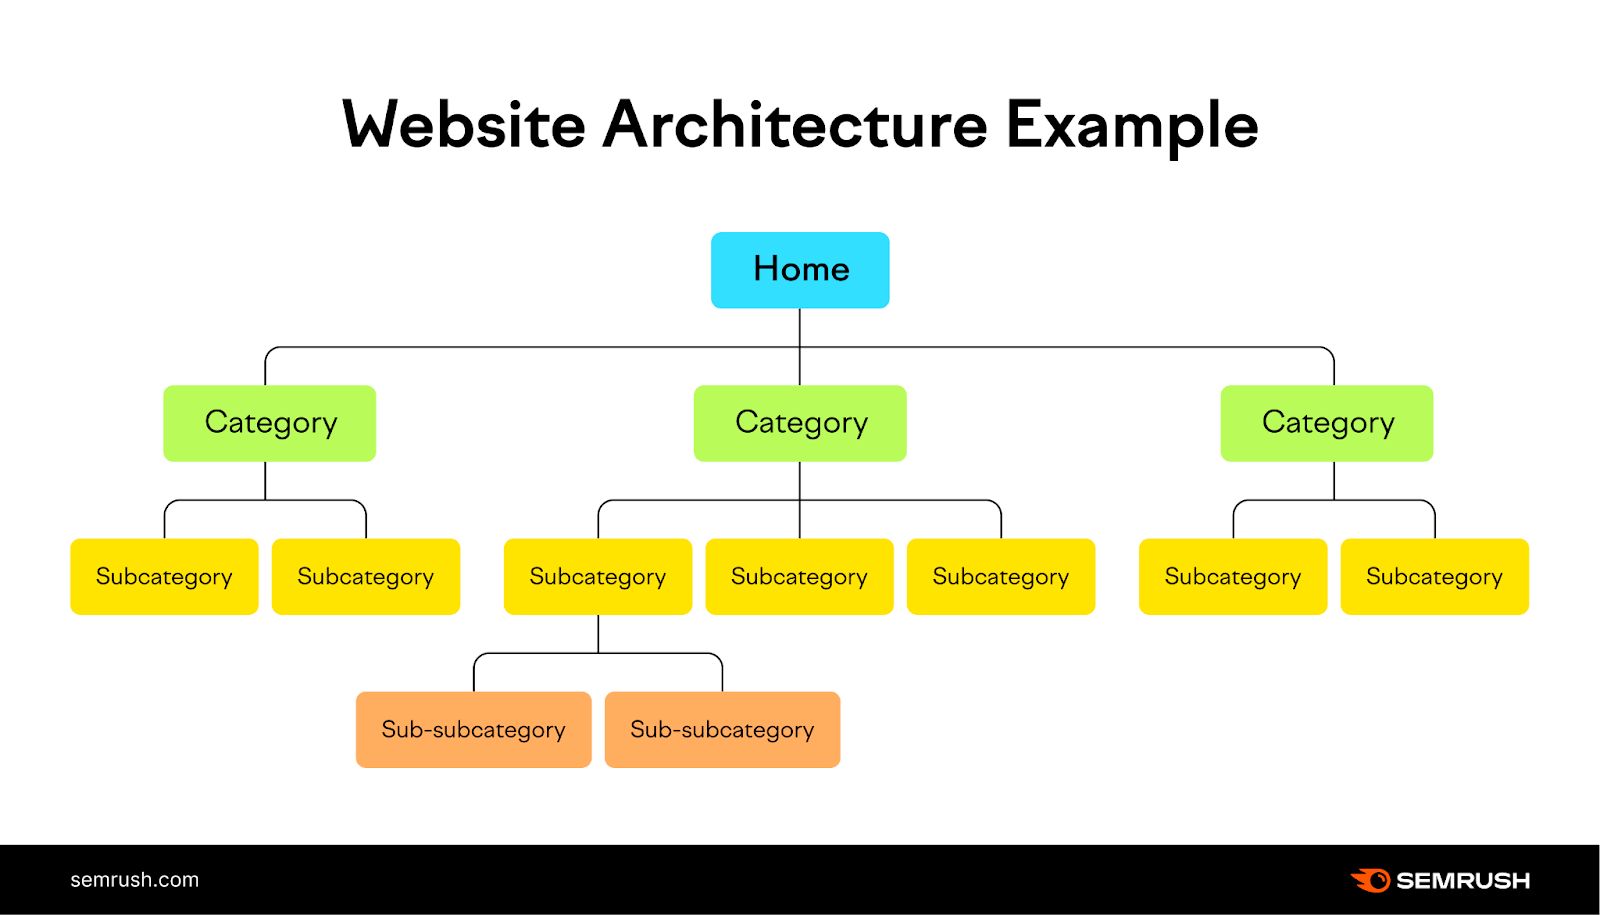 Semrush's "Website Architecture Example" infographic